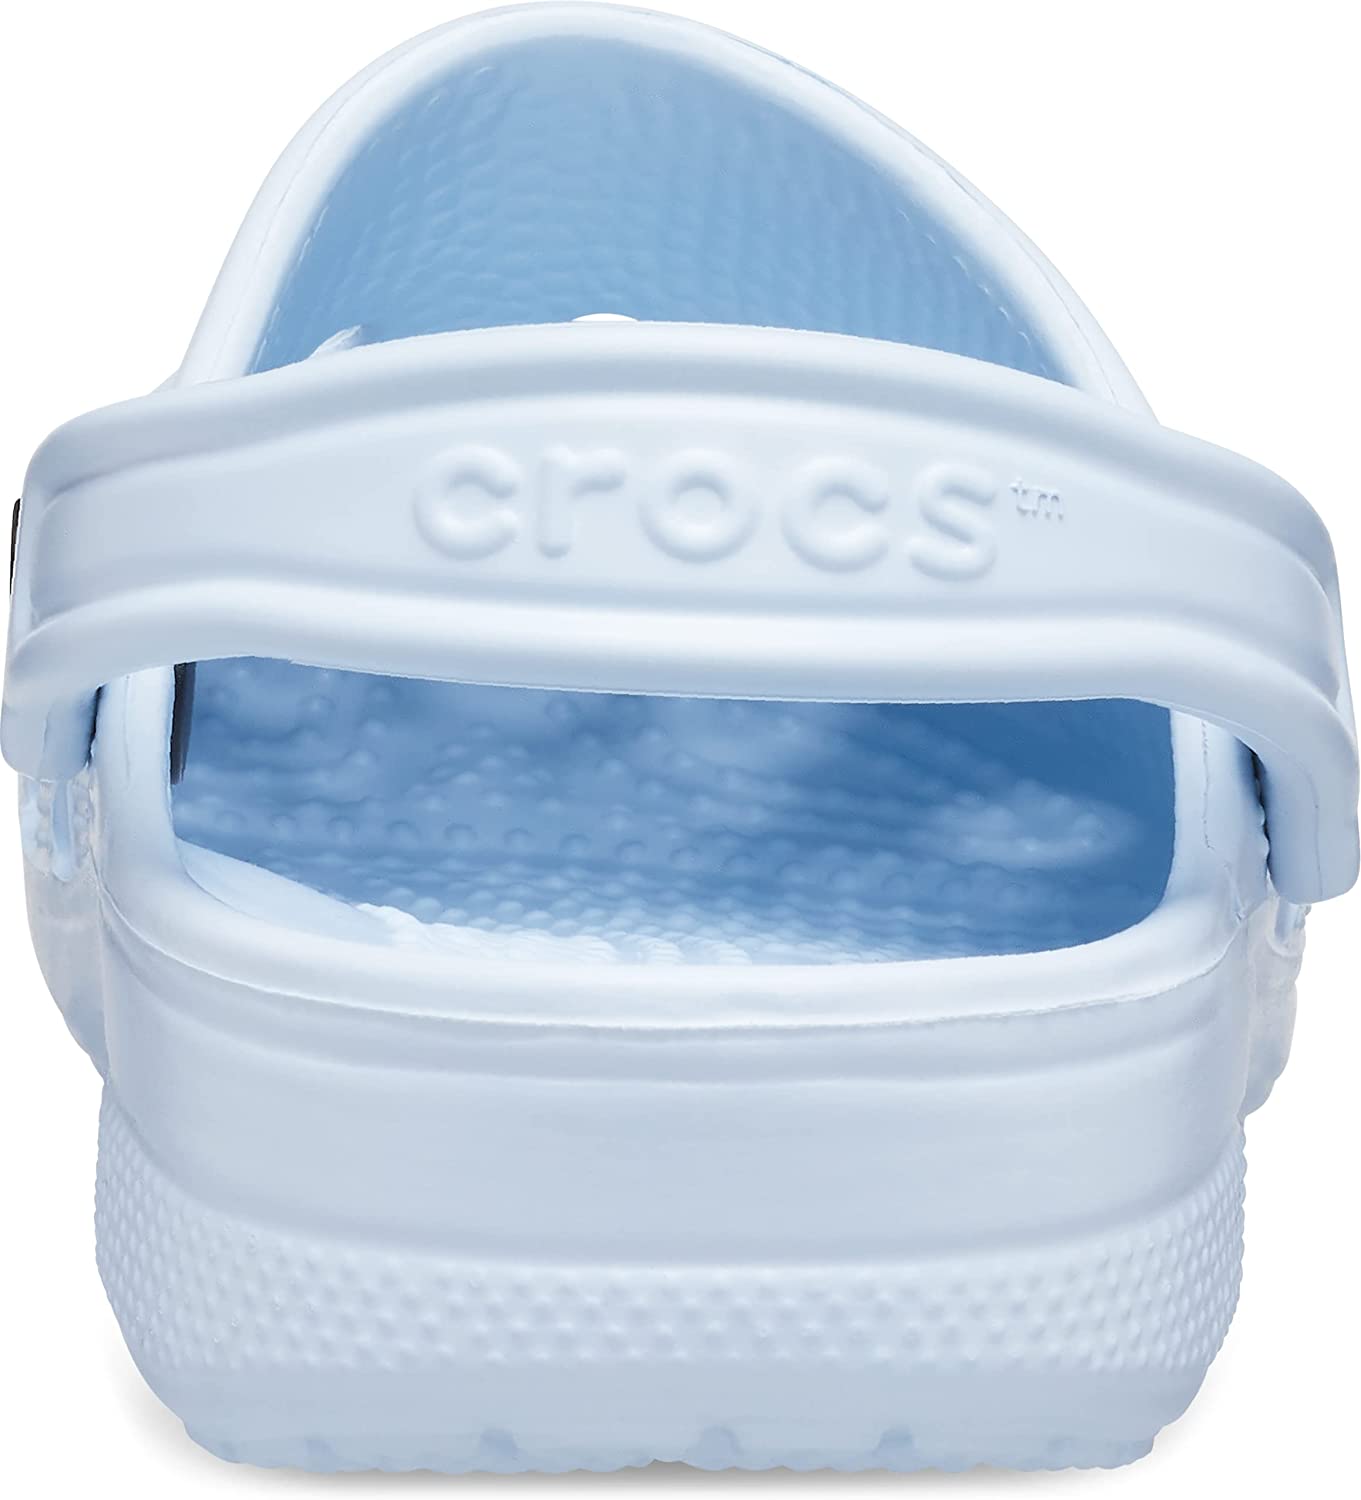 Crocs Unisex Baya Clog Sandals - image 5 of 8